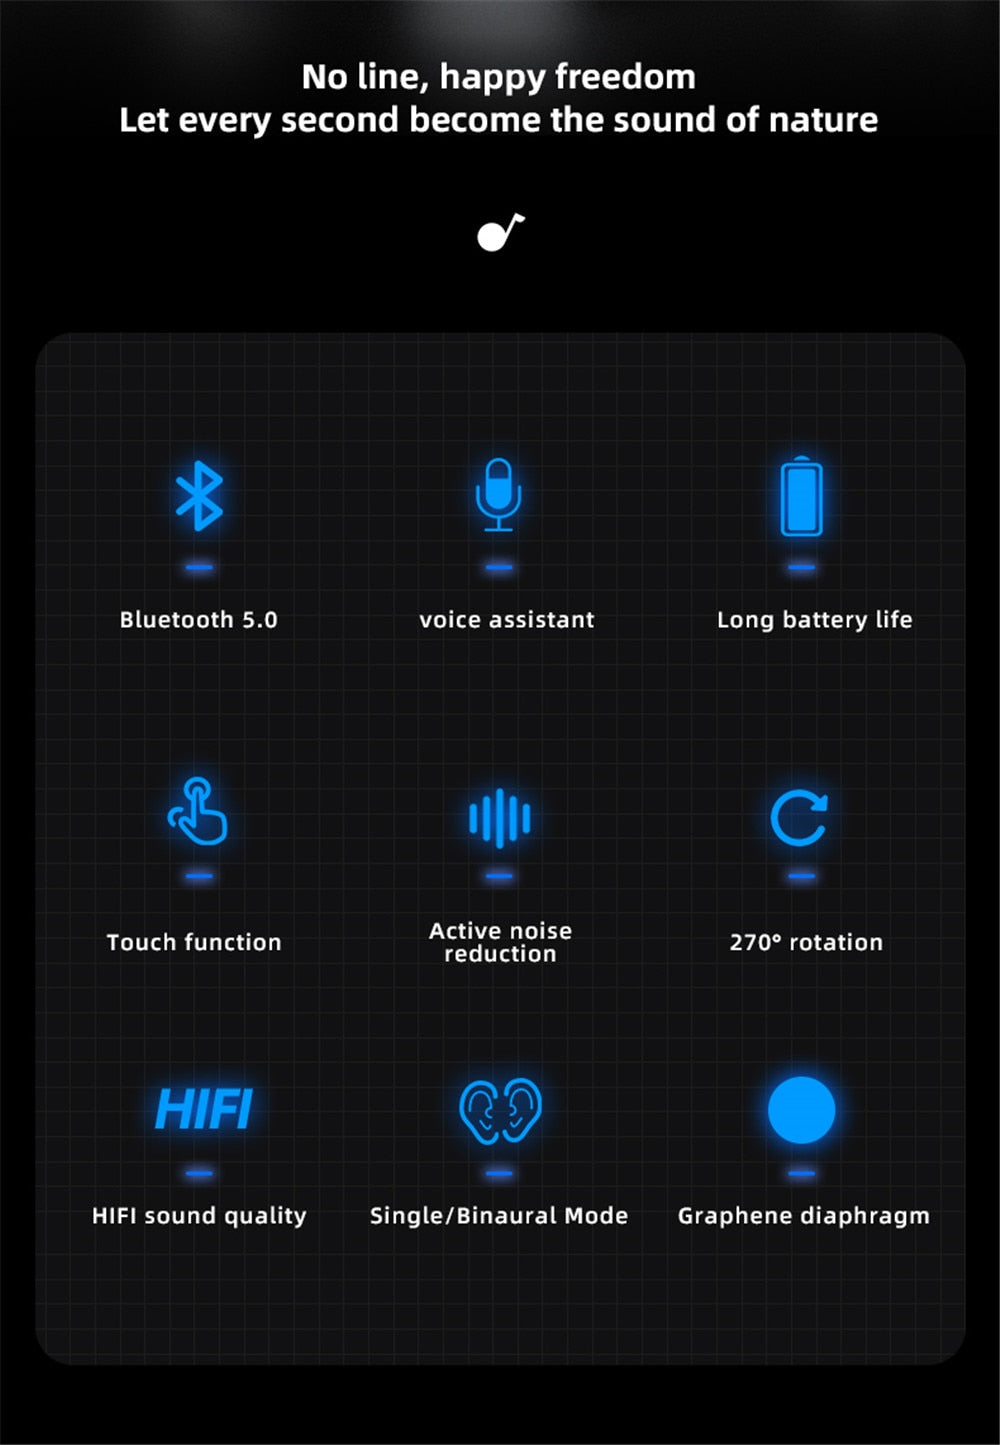 kebidu Single Business Ear-hook Bluetooth Headset 5.0 Support Button+Touch Control Earphone Noise Reduction Stereo Earpiece